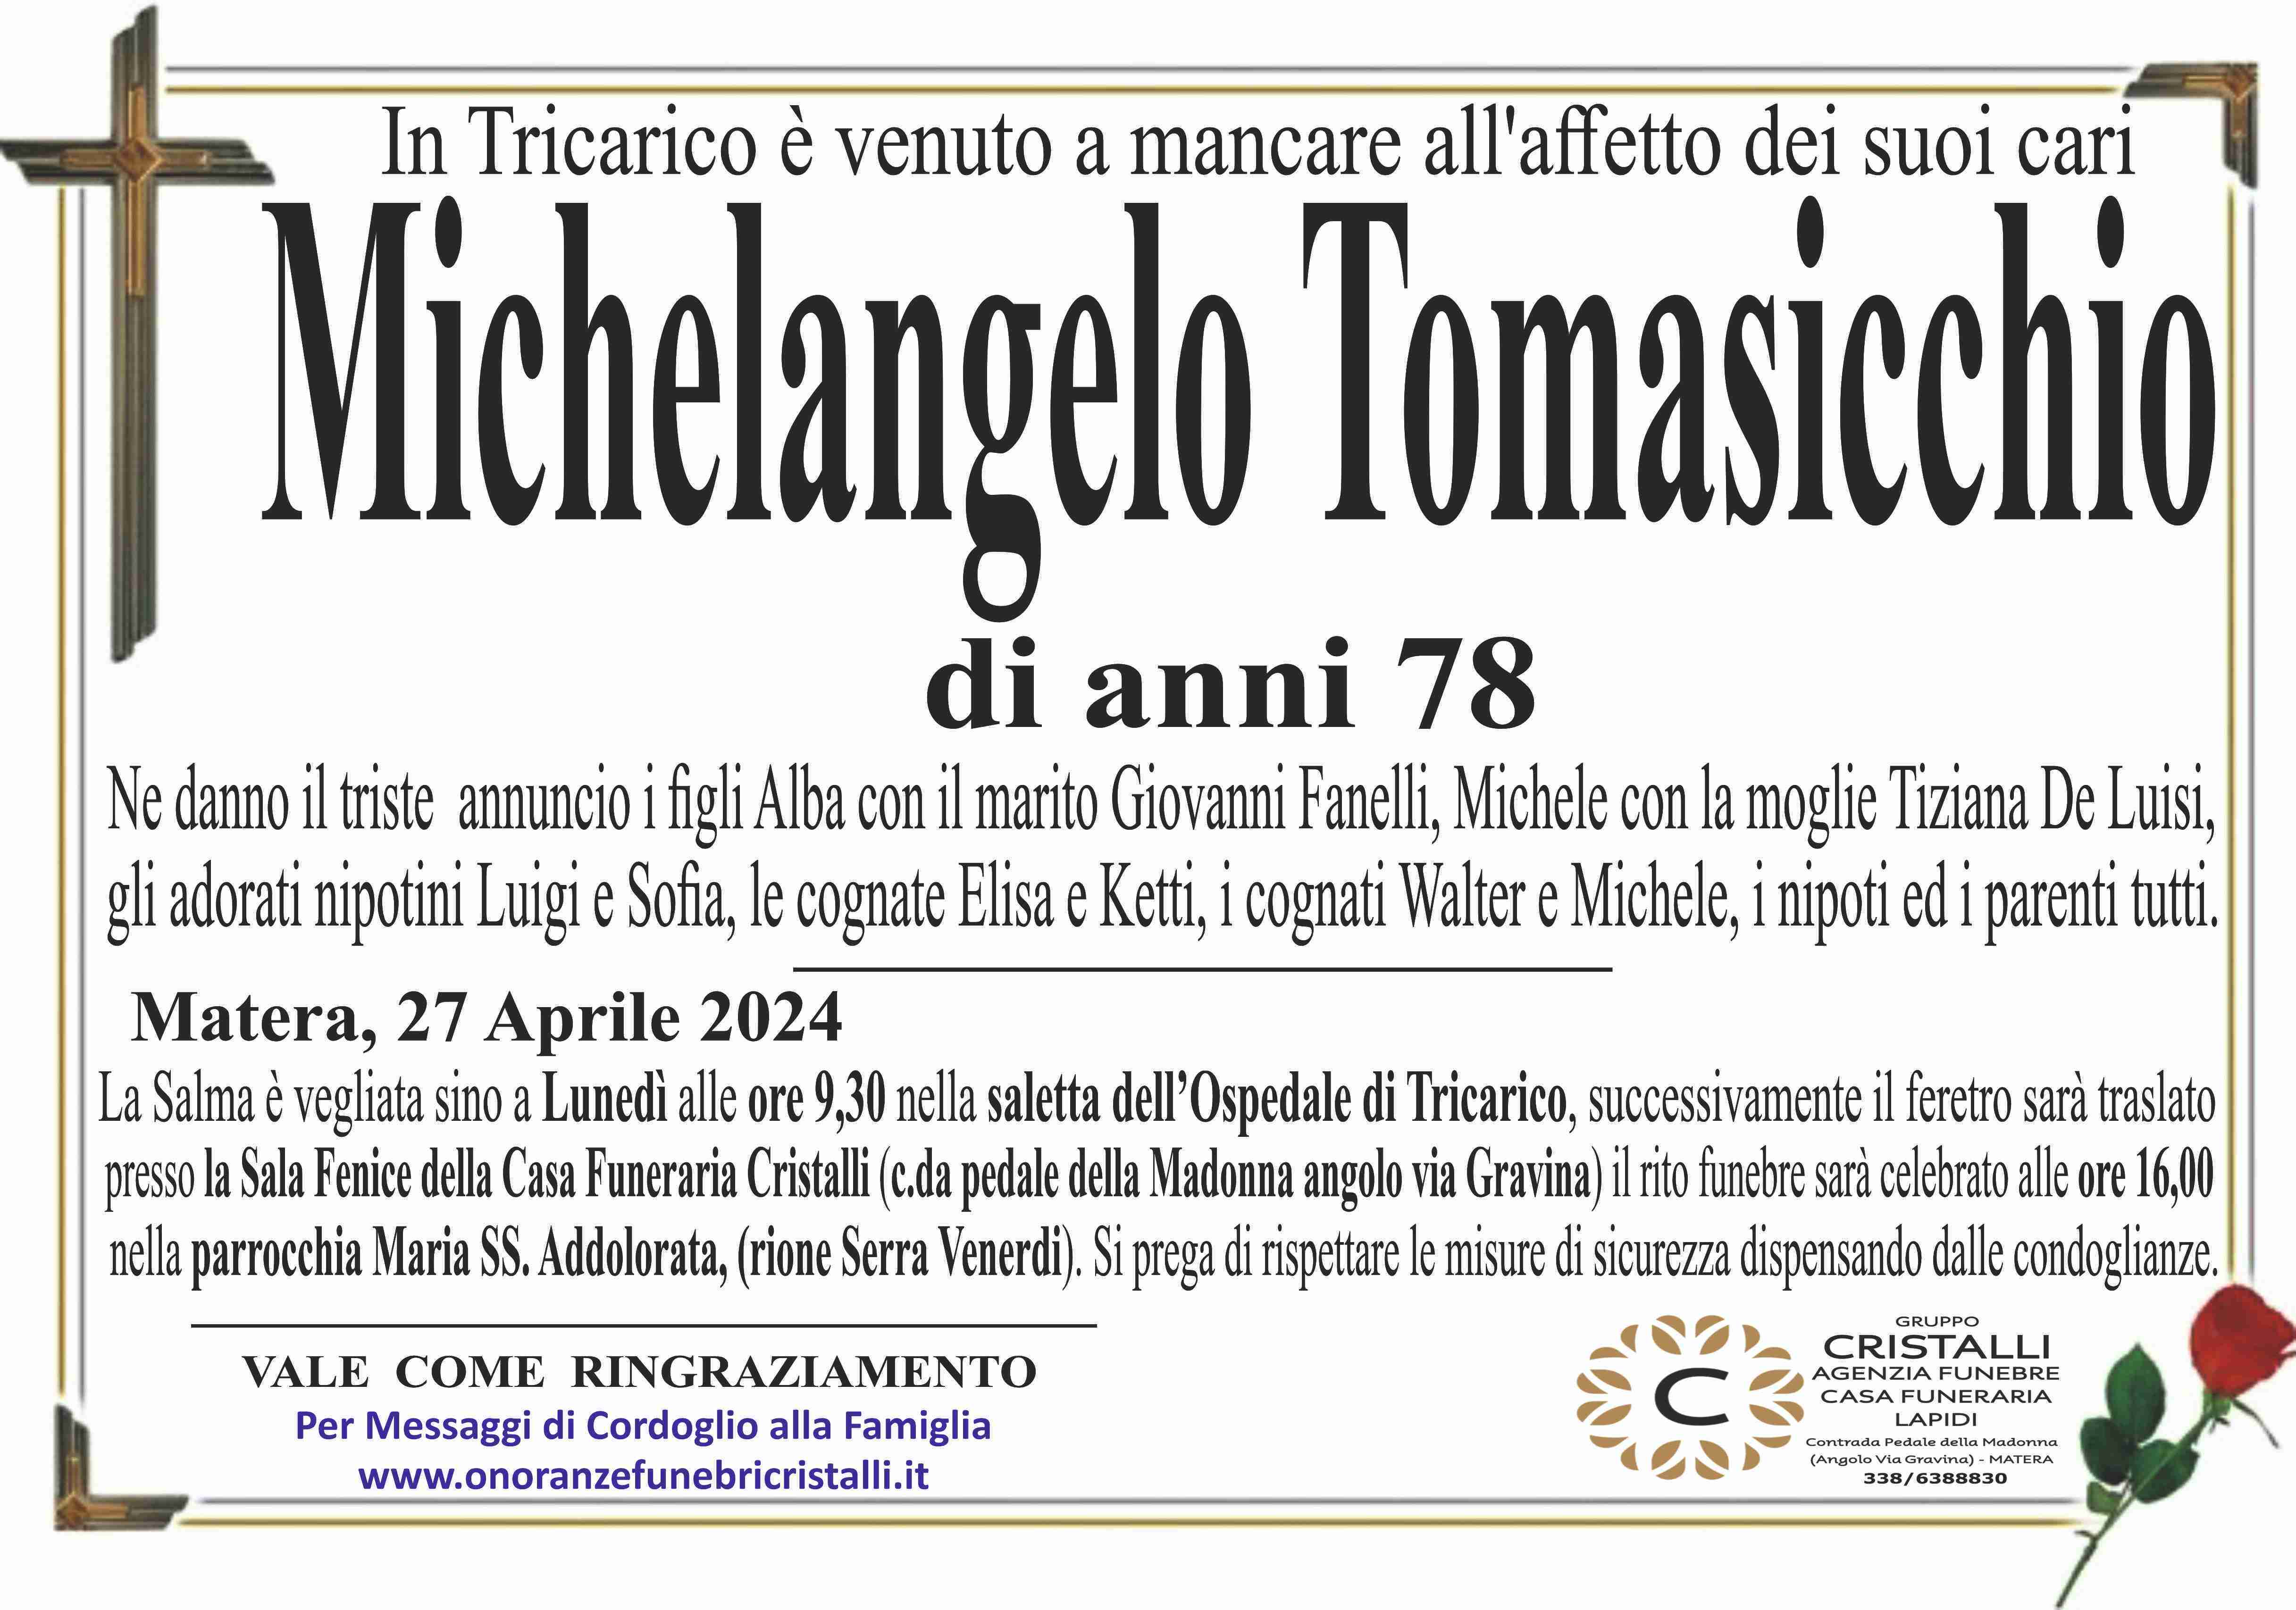 Tomasicchio Michelangelo